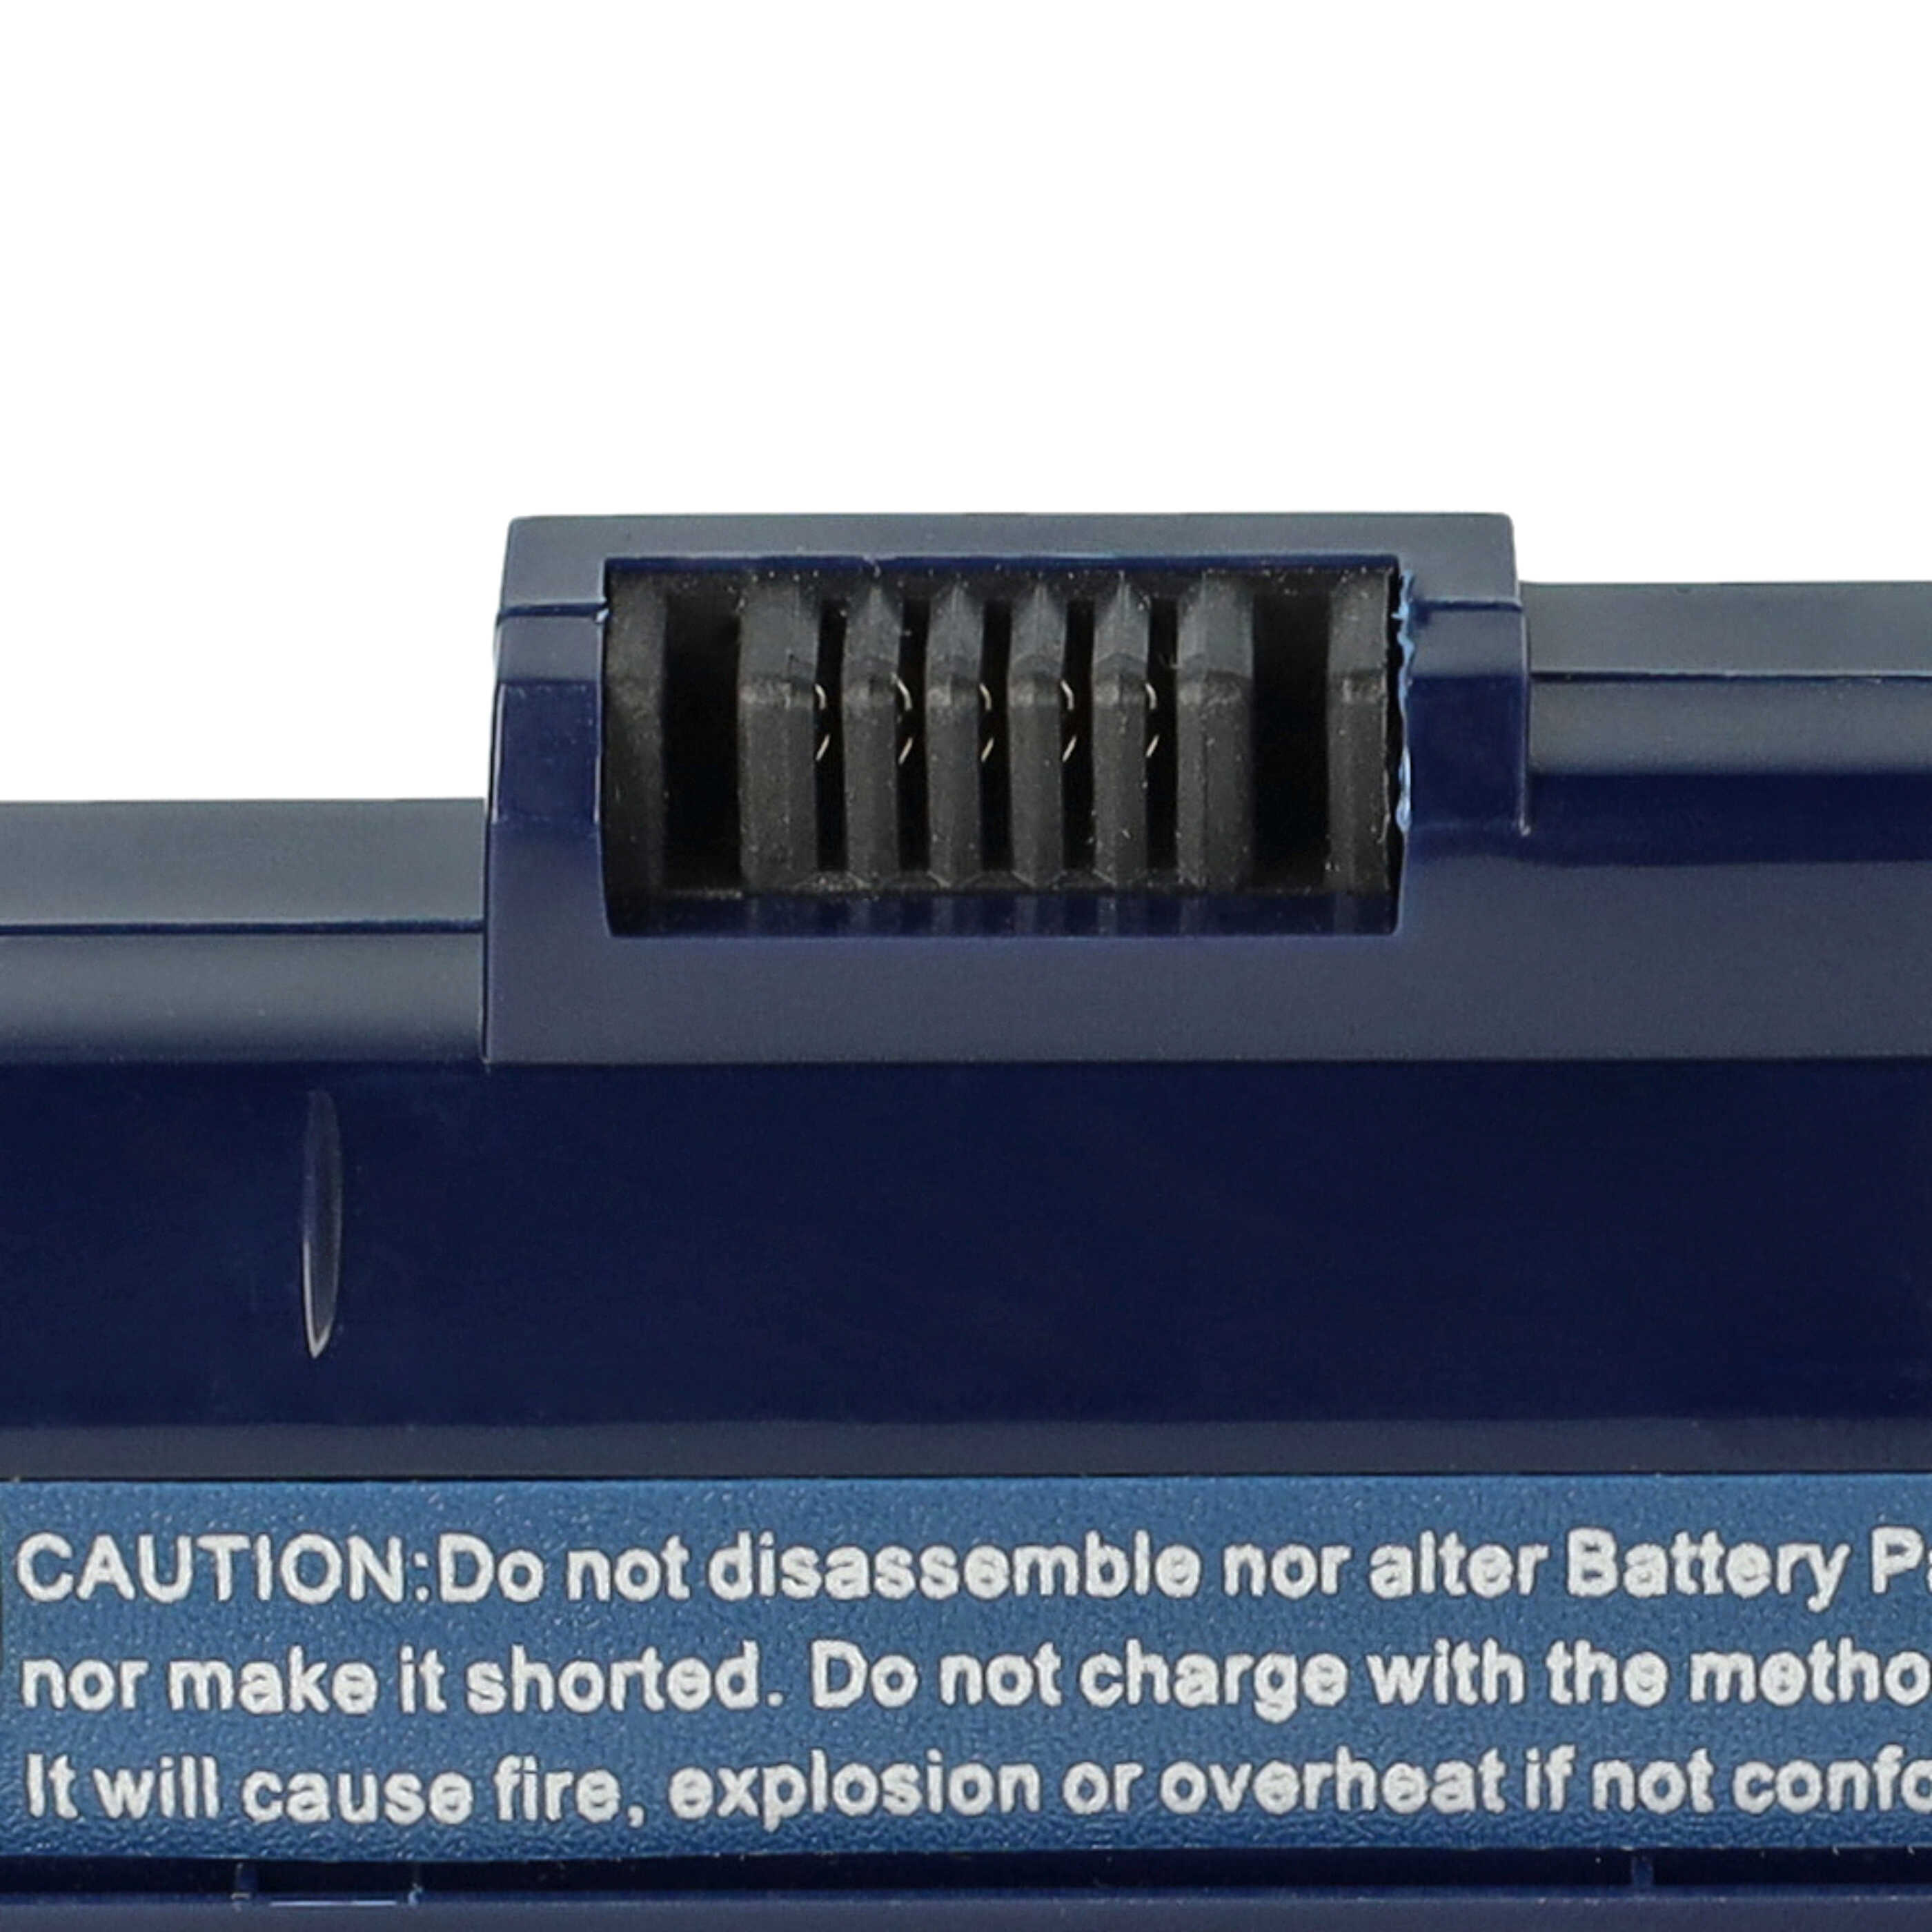 Batería reemplaza Acer 934T2780F, BT.00605.035 para notebook Gateway - 6600 mAh 11,1 V Li-Ion azul oscuro